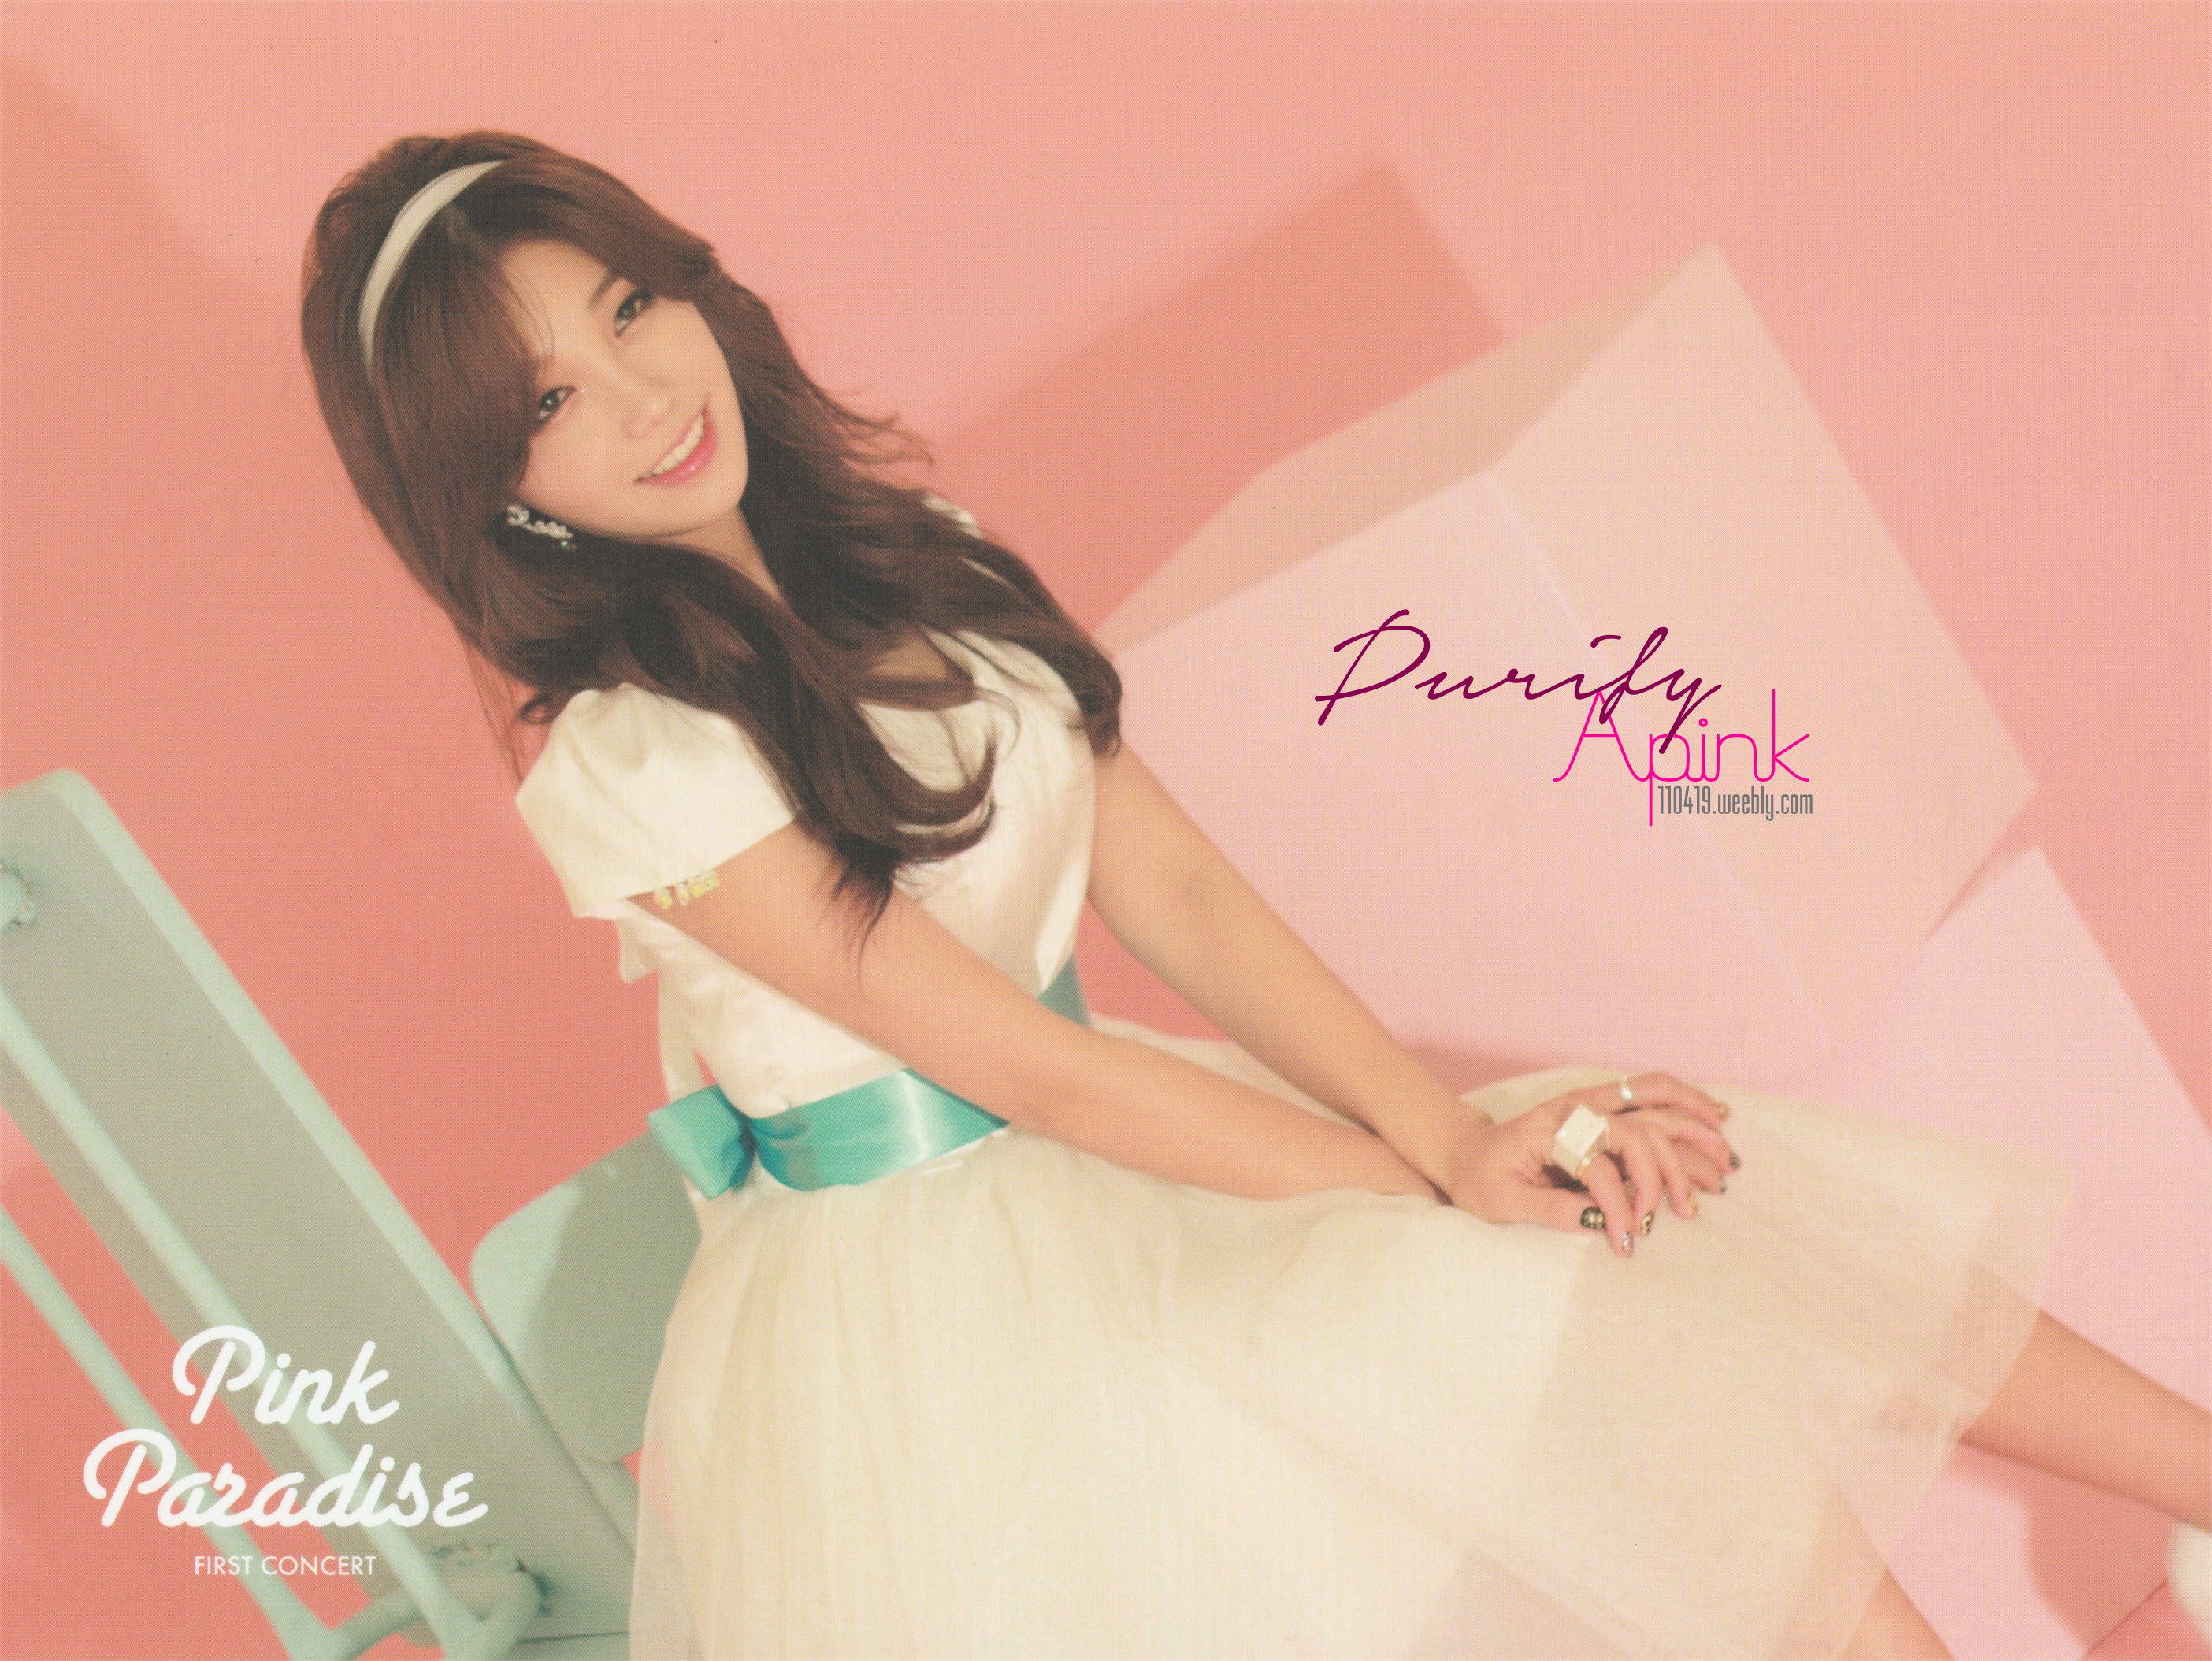 Pink Paradise DVD 에이핑크 미니 포스터 스캔본 04.jpg